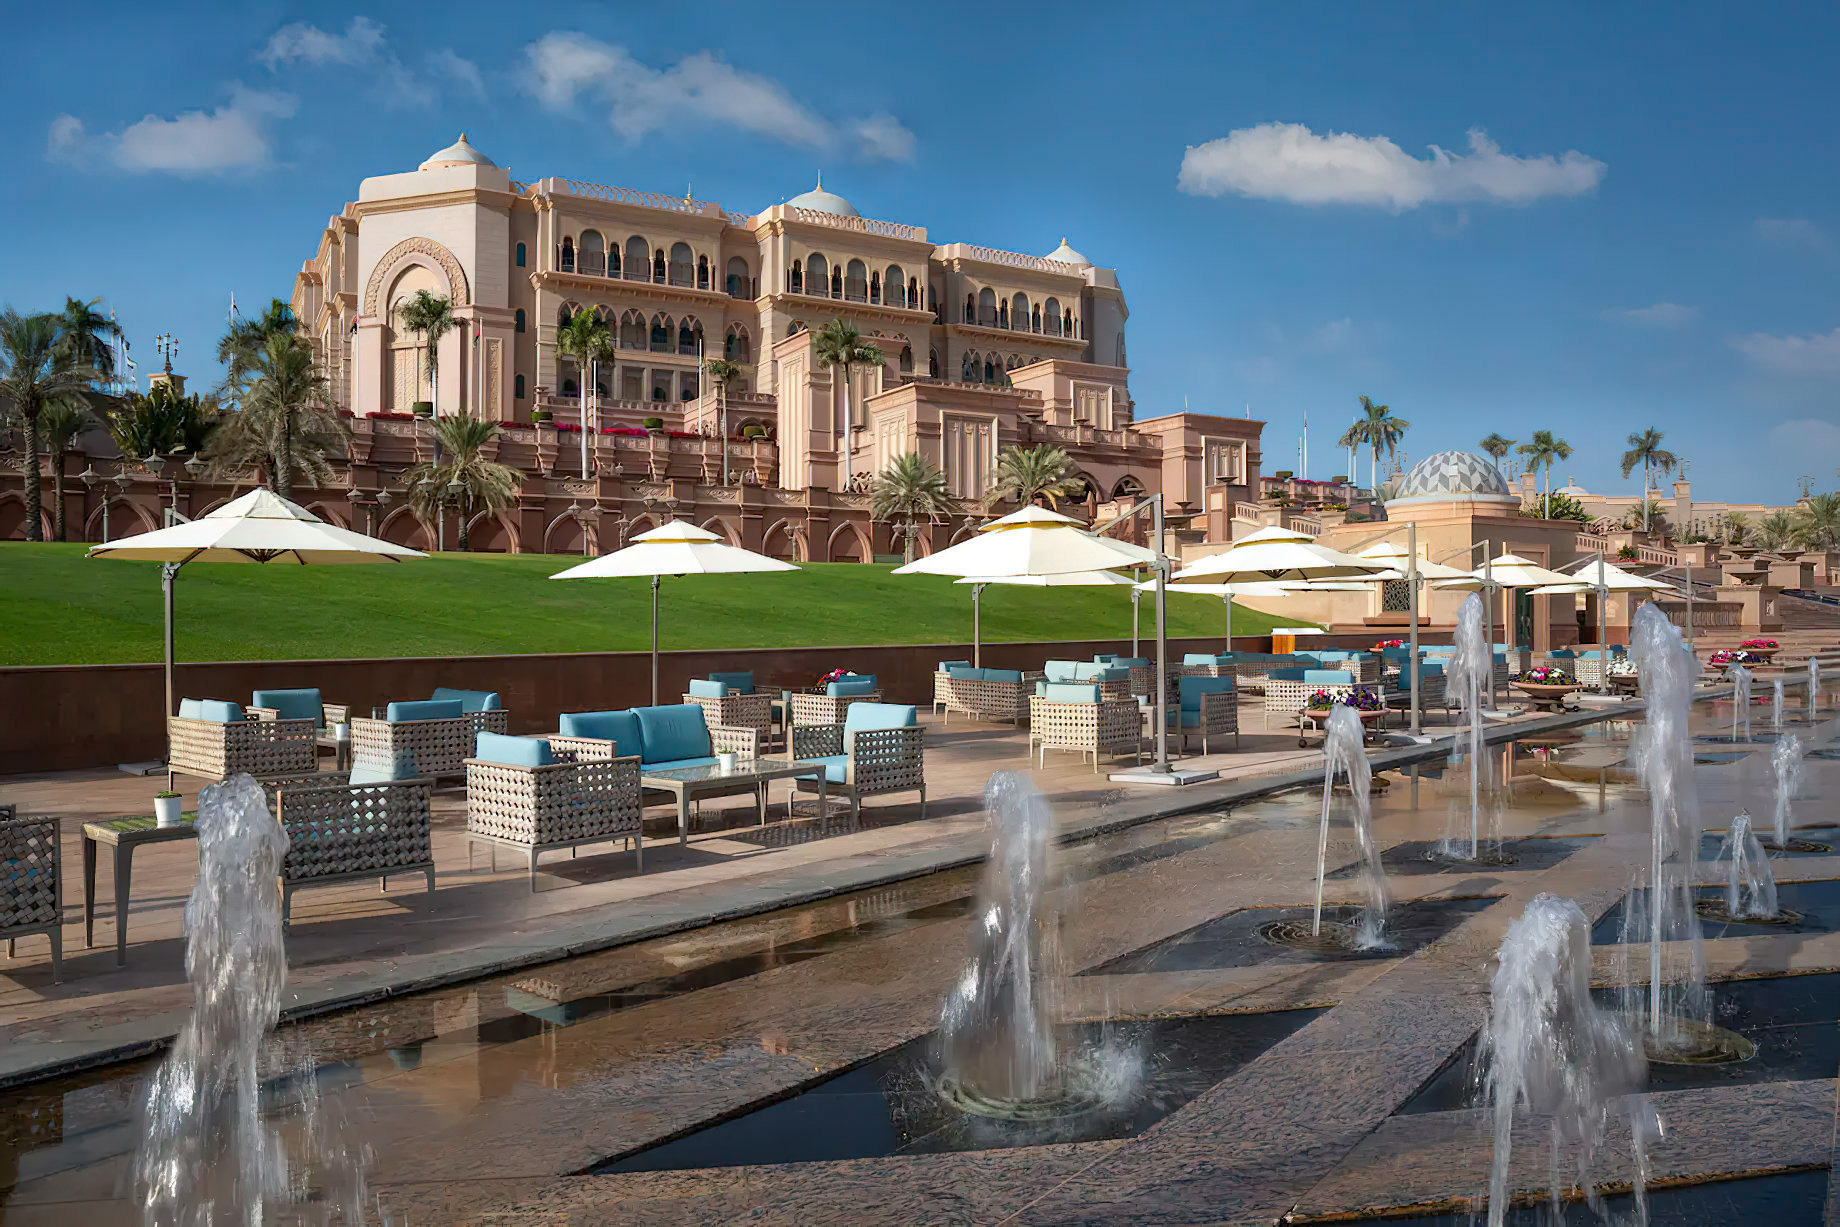 Emirates Palace Abu Dhabi Hotel – Abu Dhabi, UAE – Dining at Le Cafe by the Fountain